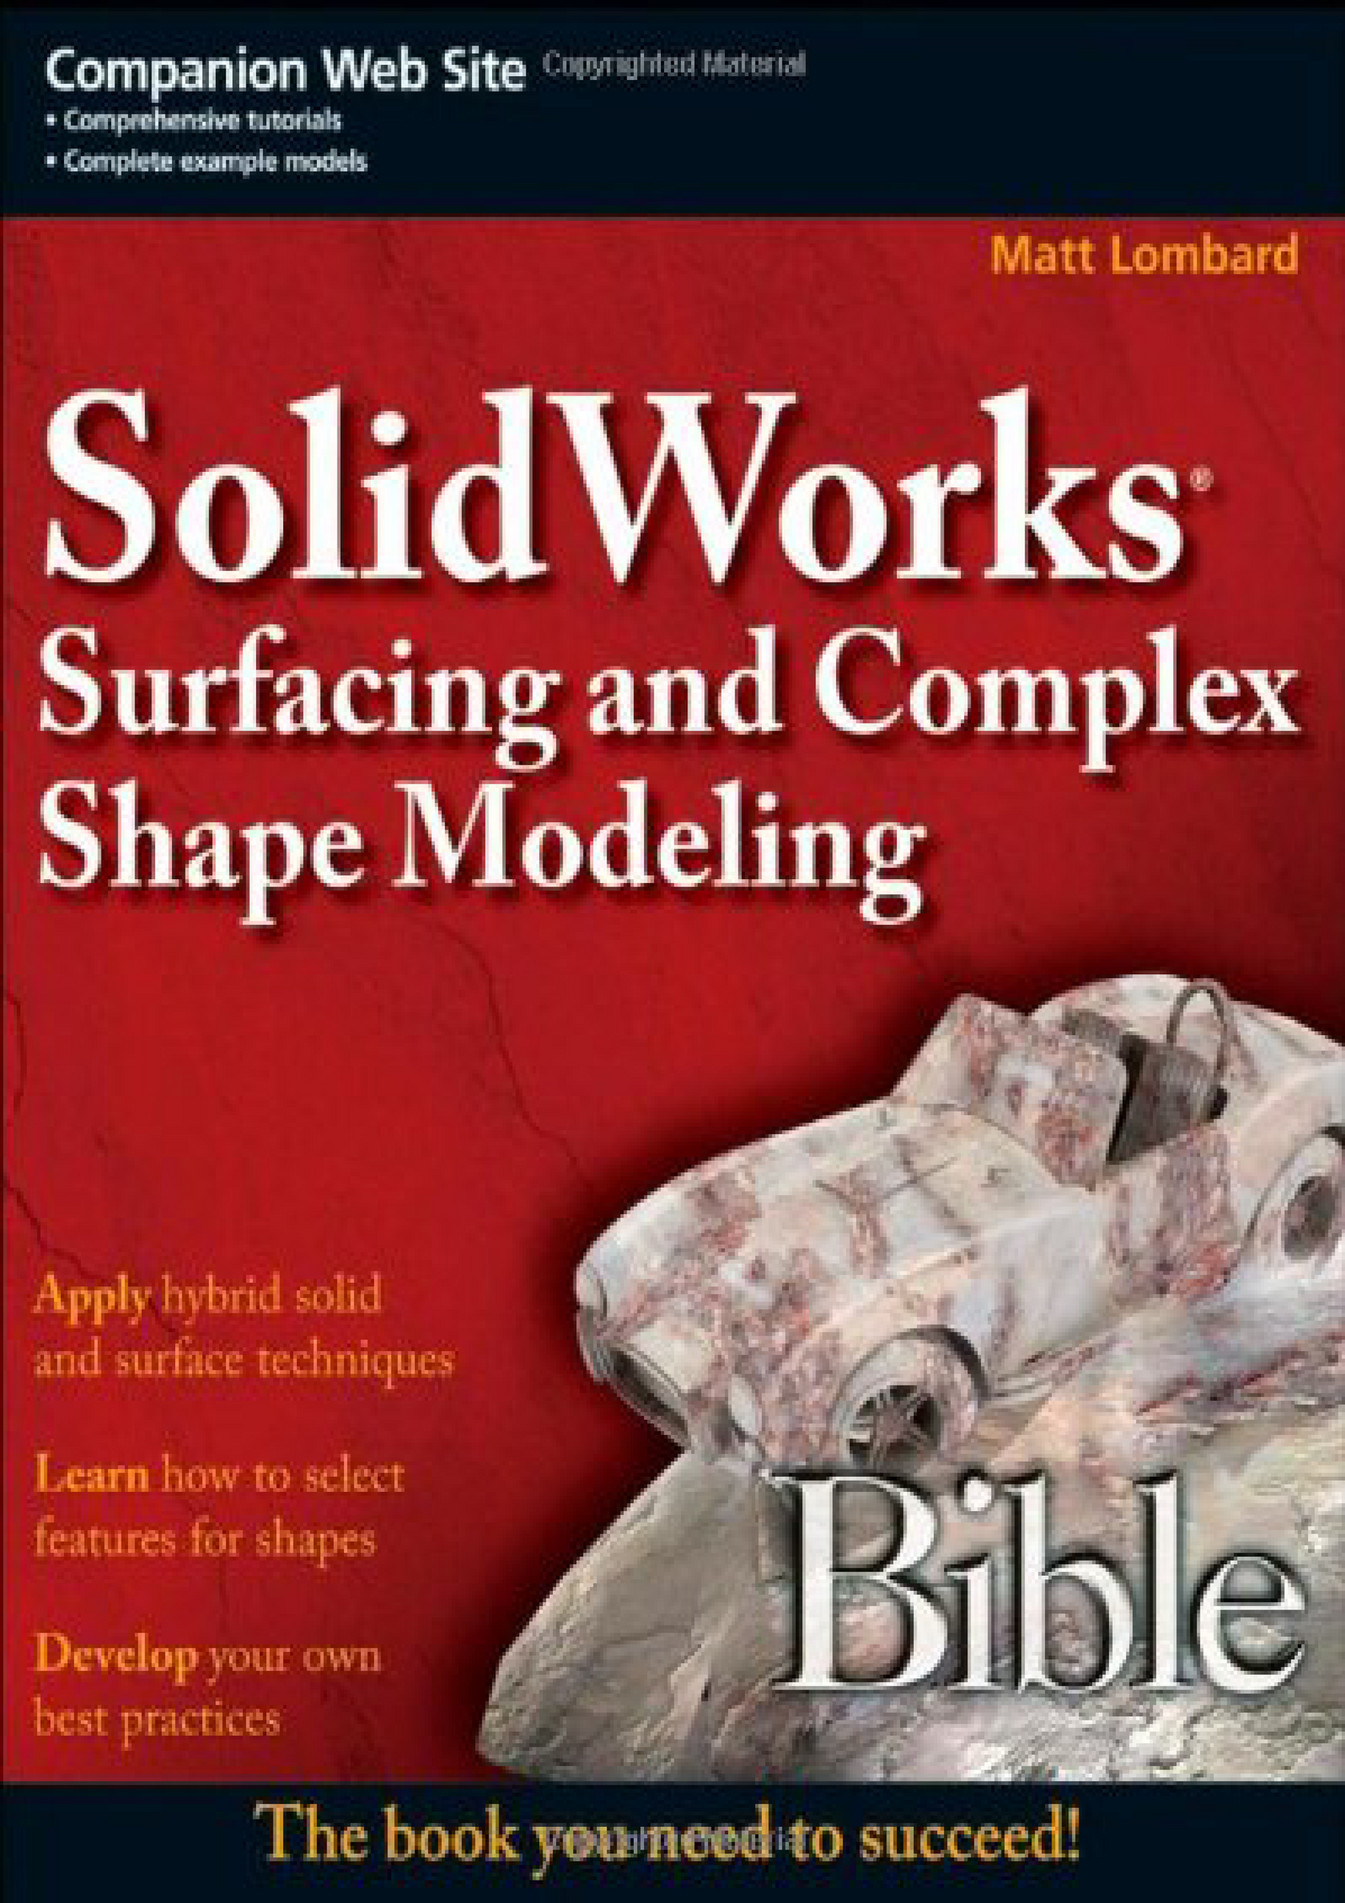 solidworks 2010 bible pdf free download